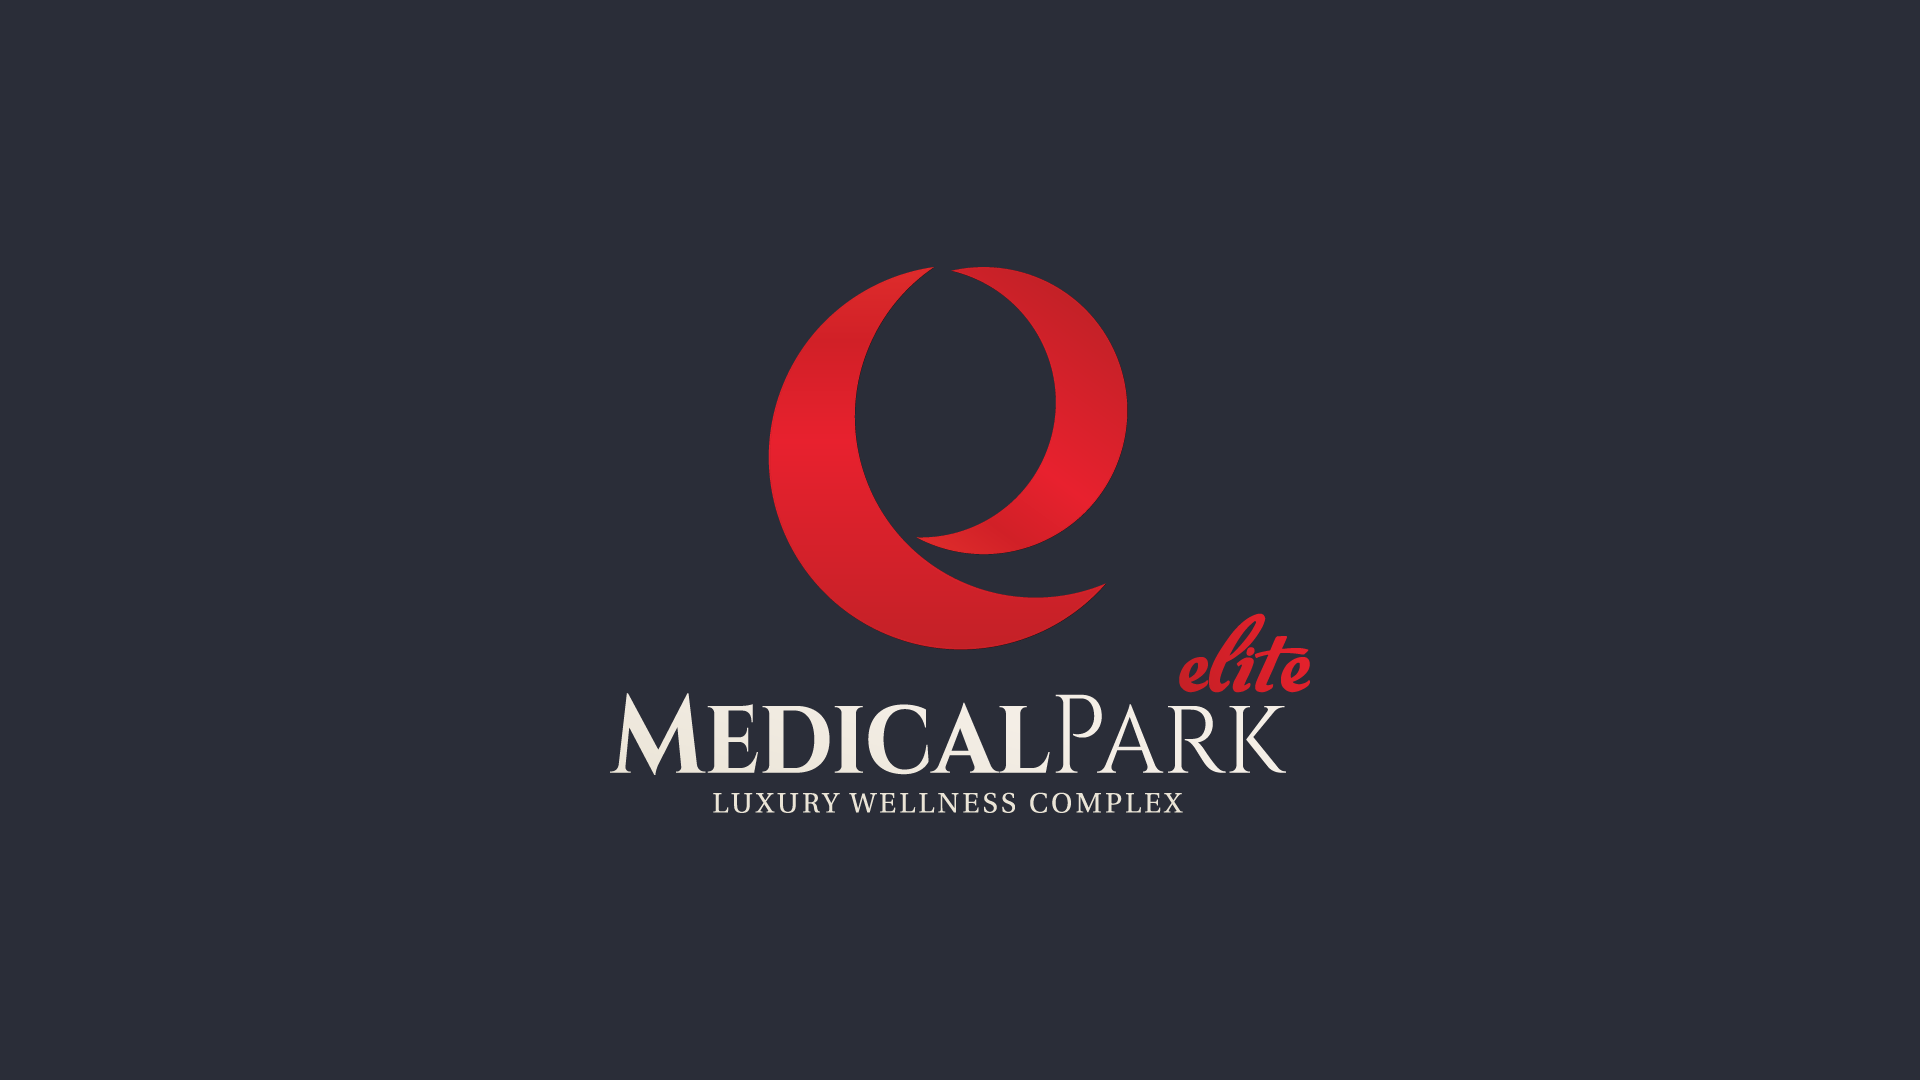 Medical Park Elite, Luxury Medical Services In The Neighborhood!